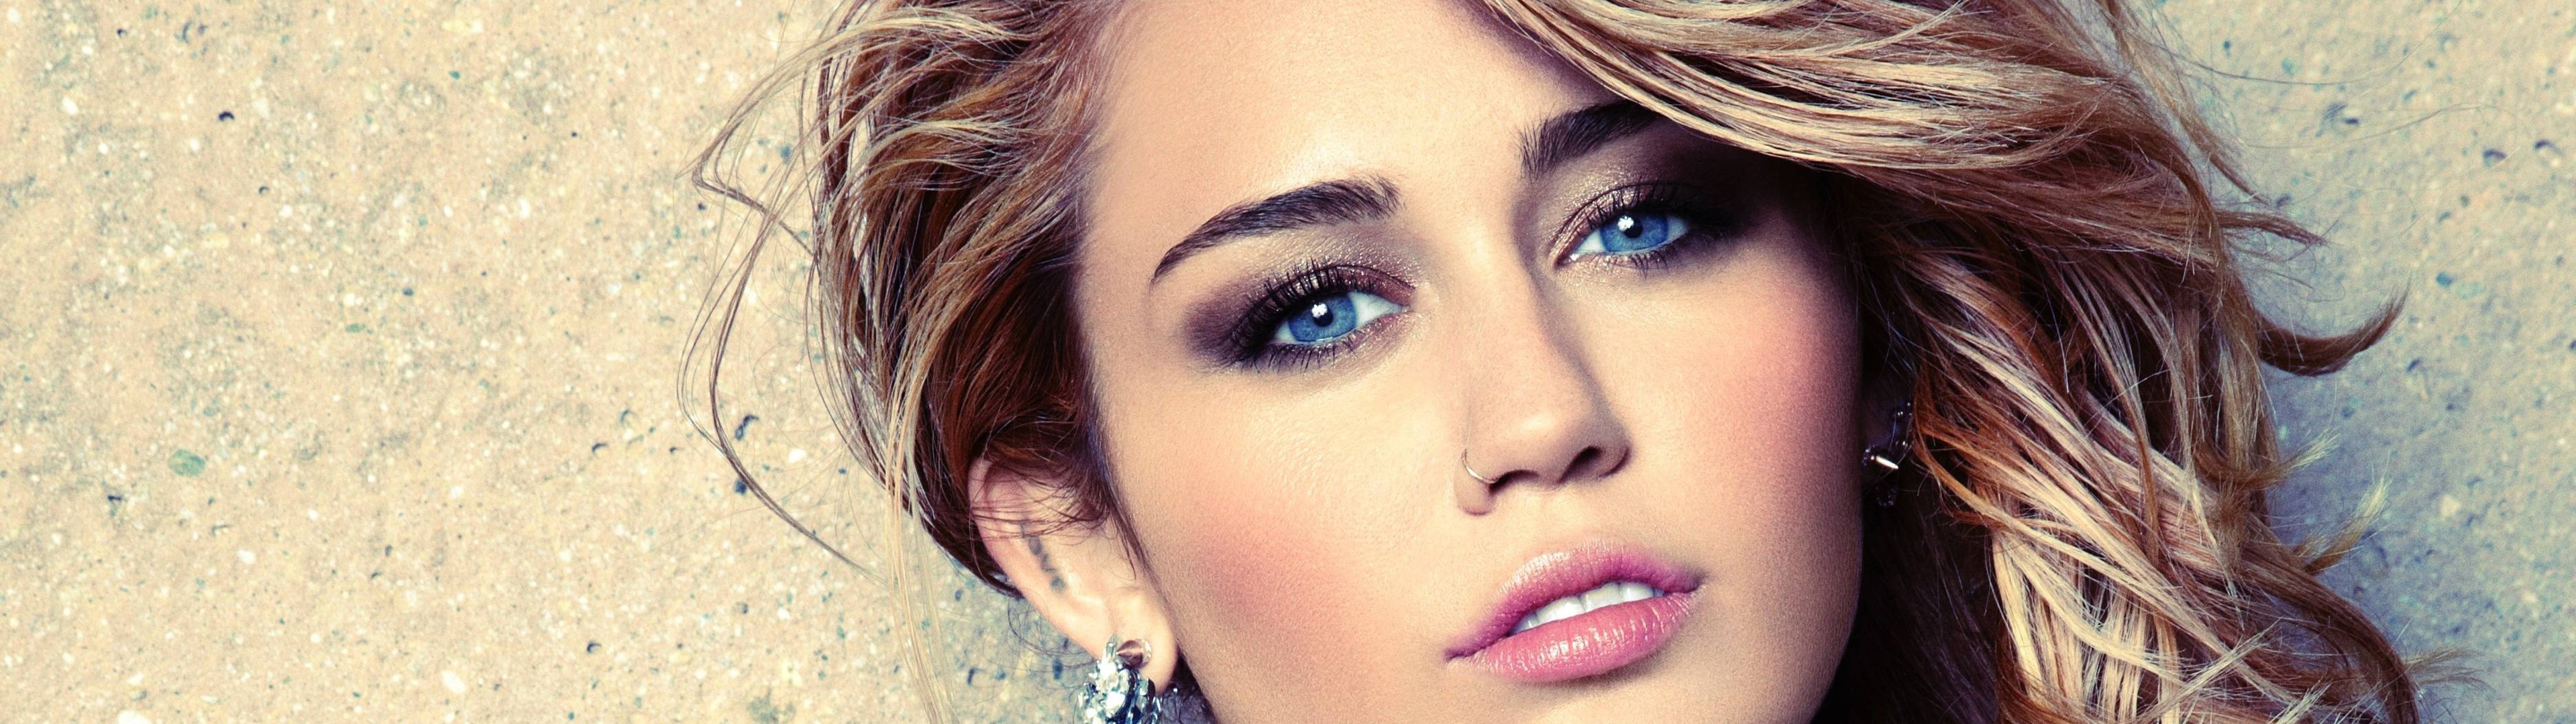 Miley Cyrus 2019 4K Ultra HD Mobile Wallpaper